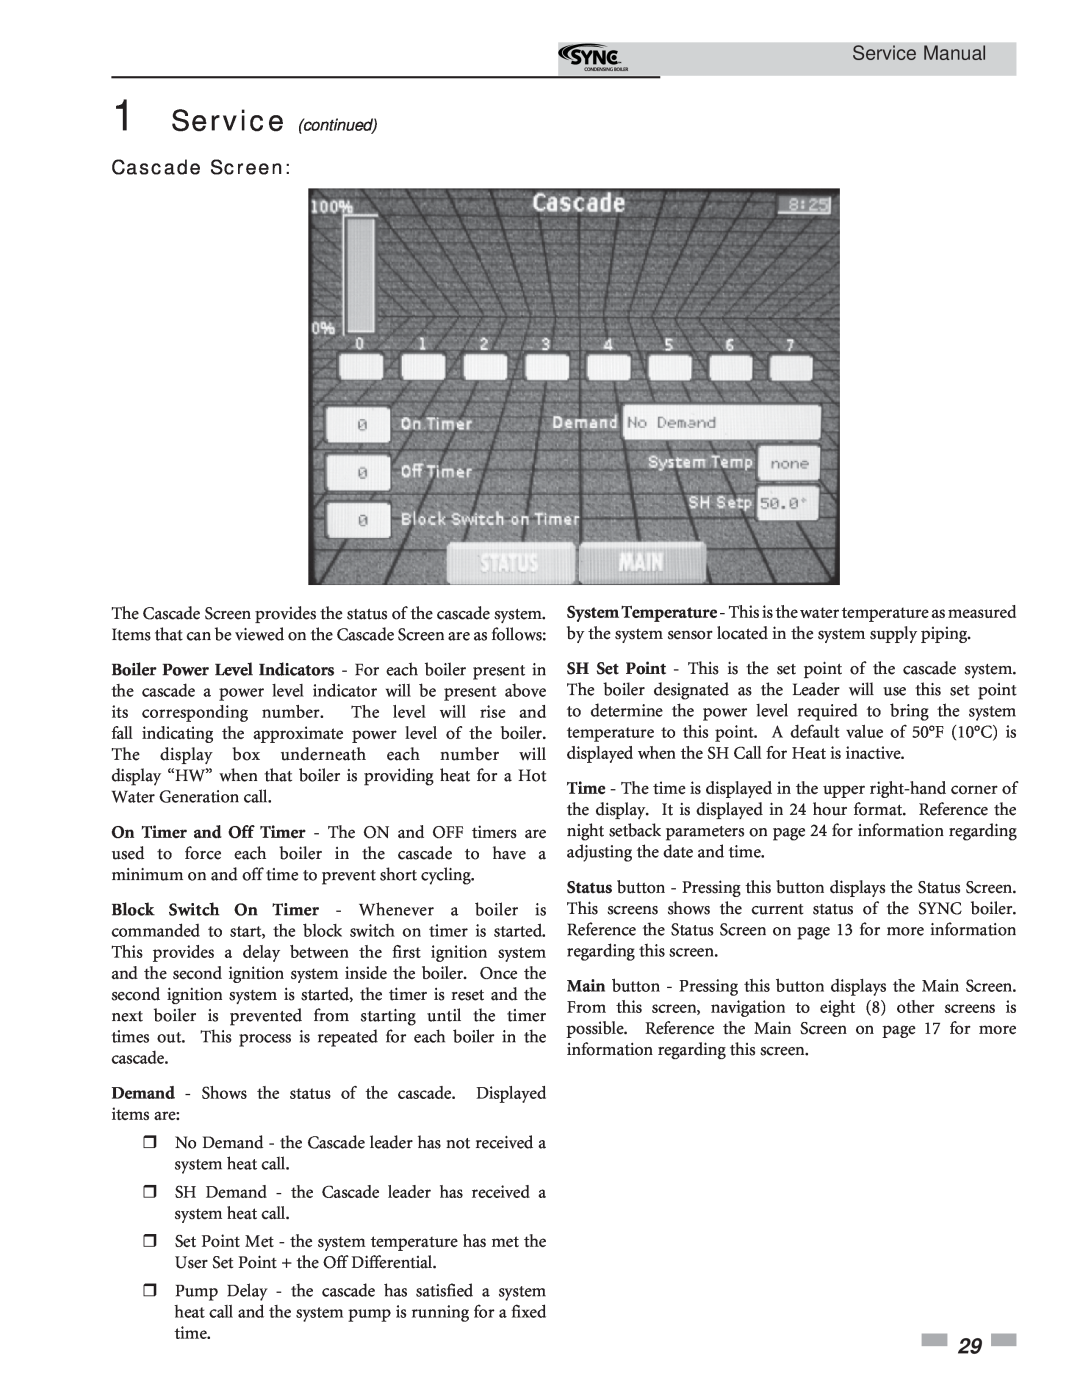 Lochinvar 1.3 service manual Service Manual, Cascade Screen 